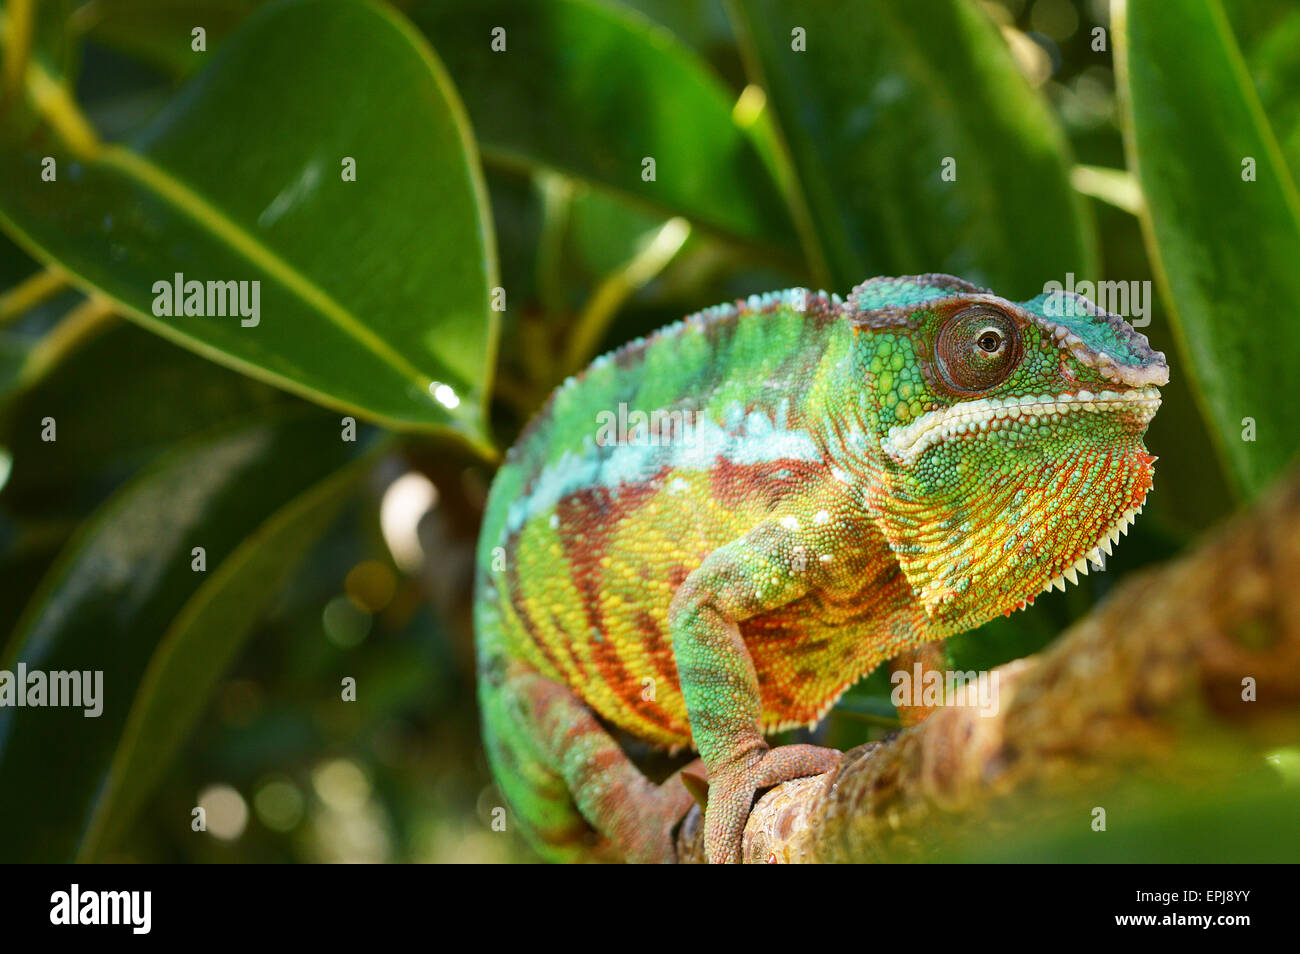 panther chameleon(furcifer pardalis) Stock Photo